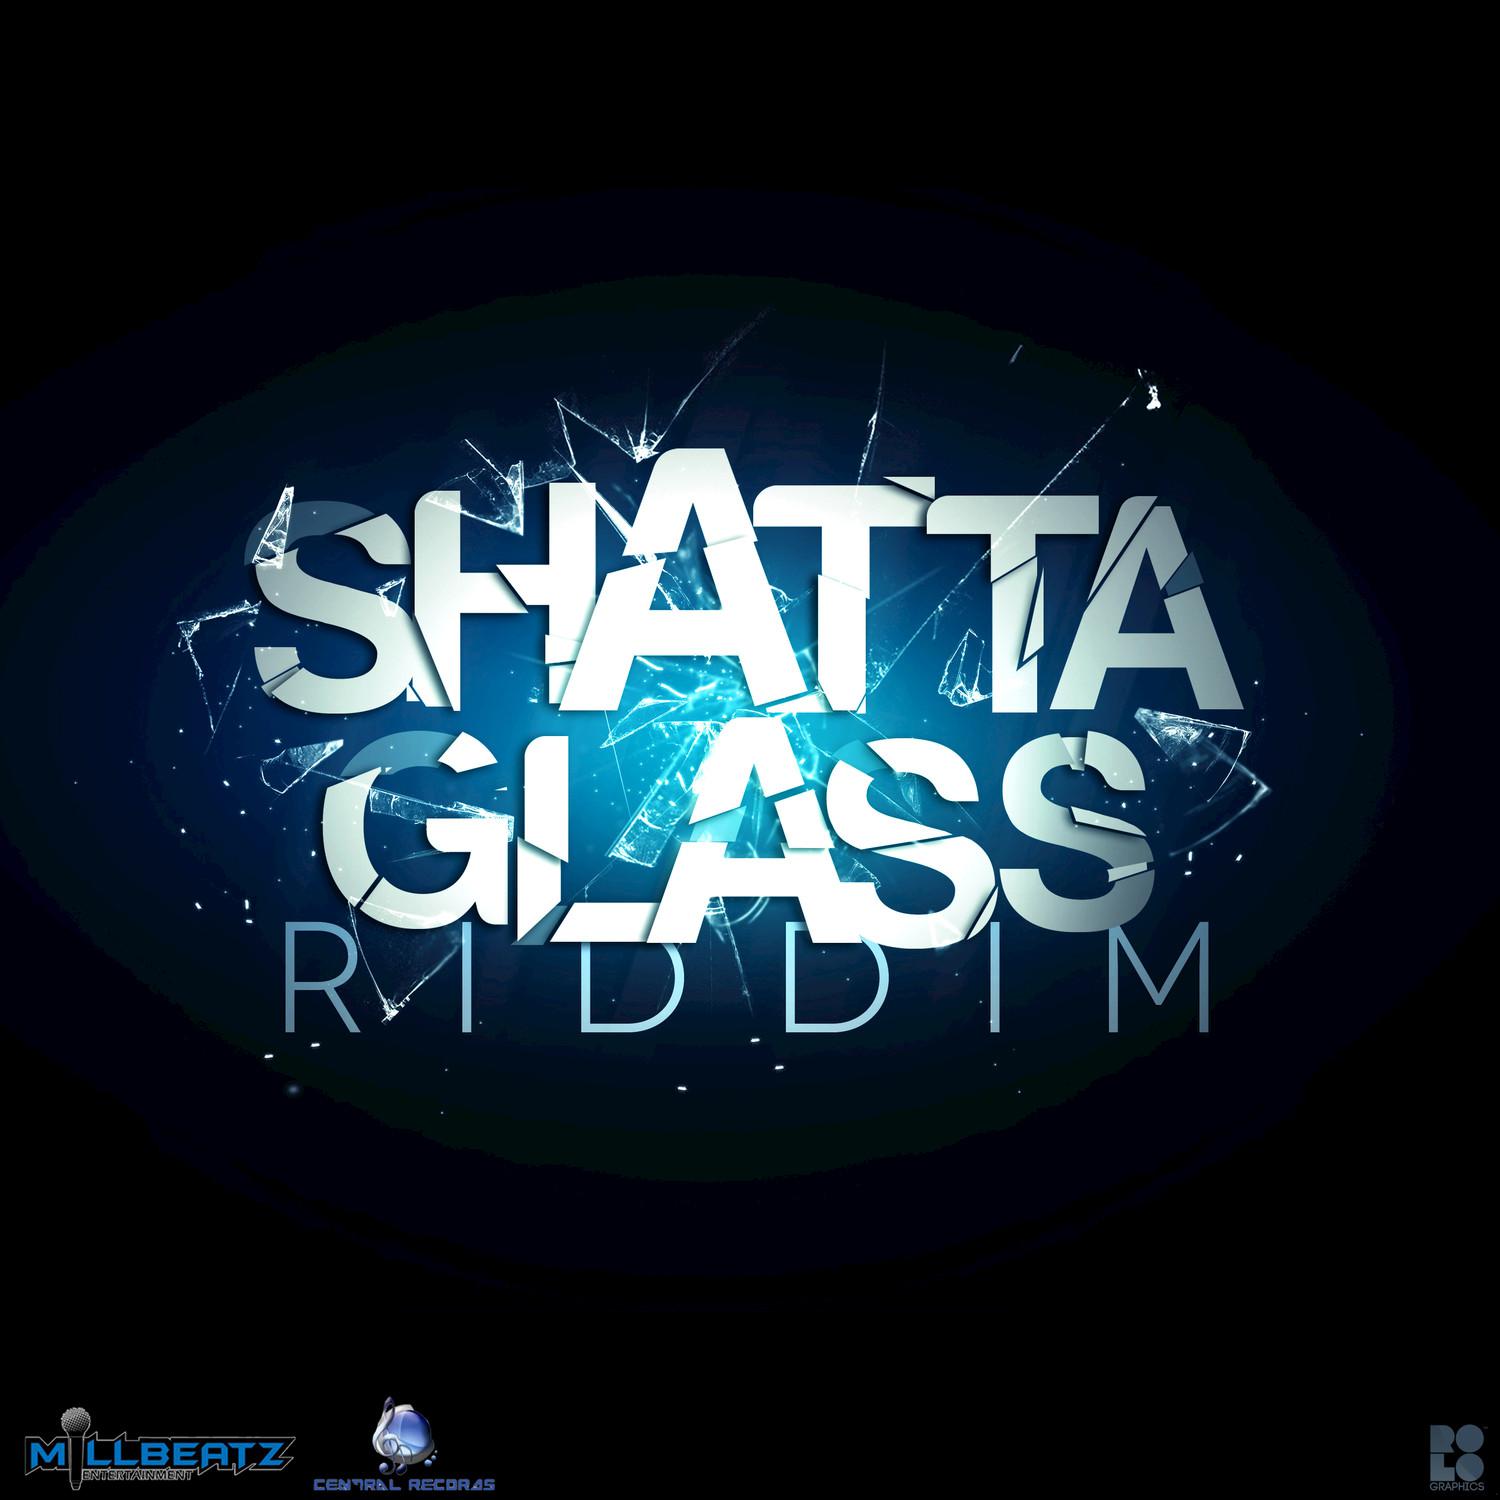 Shatta Glass Riddim